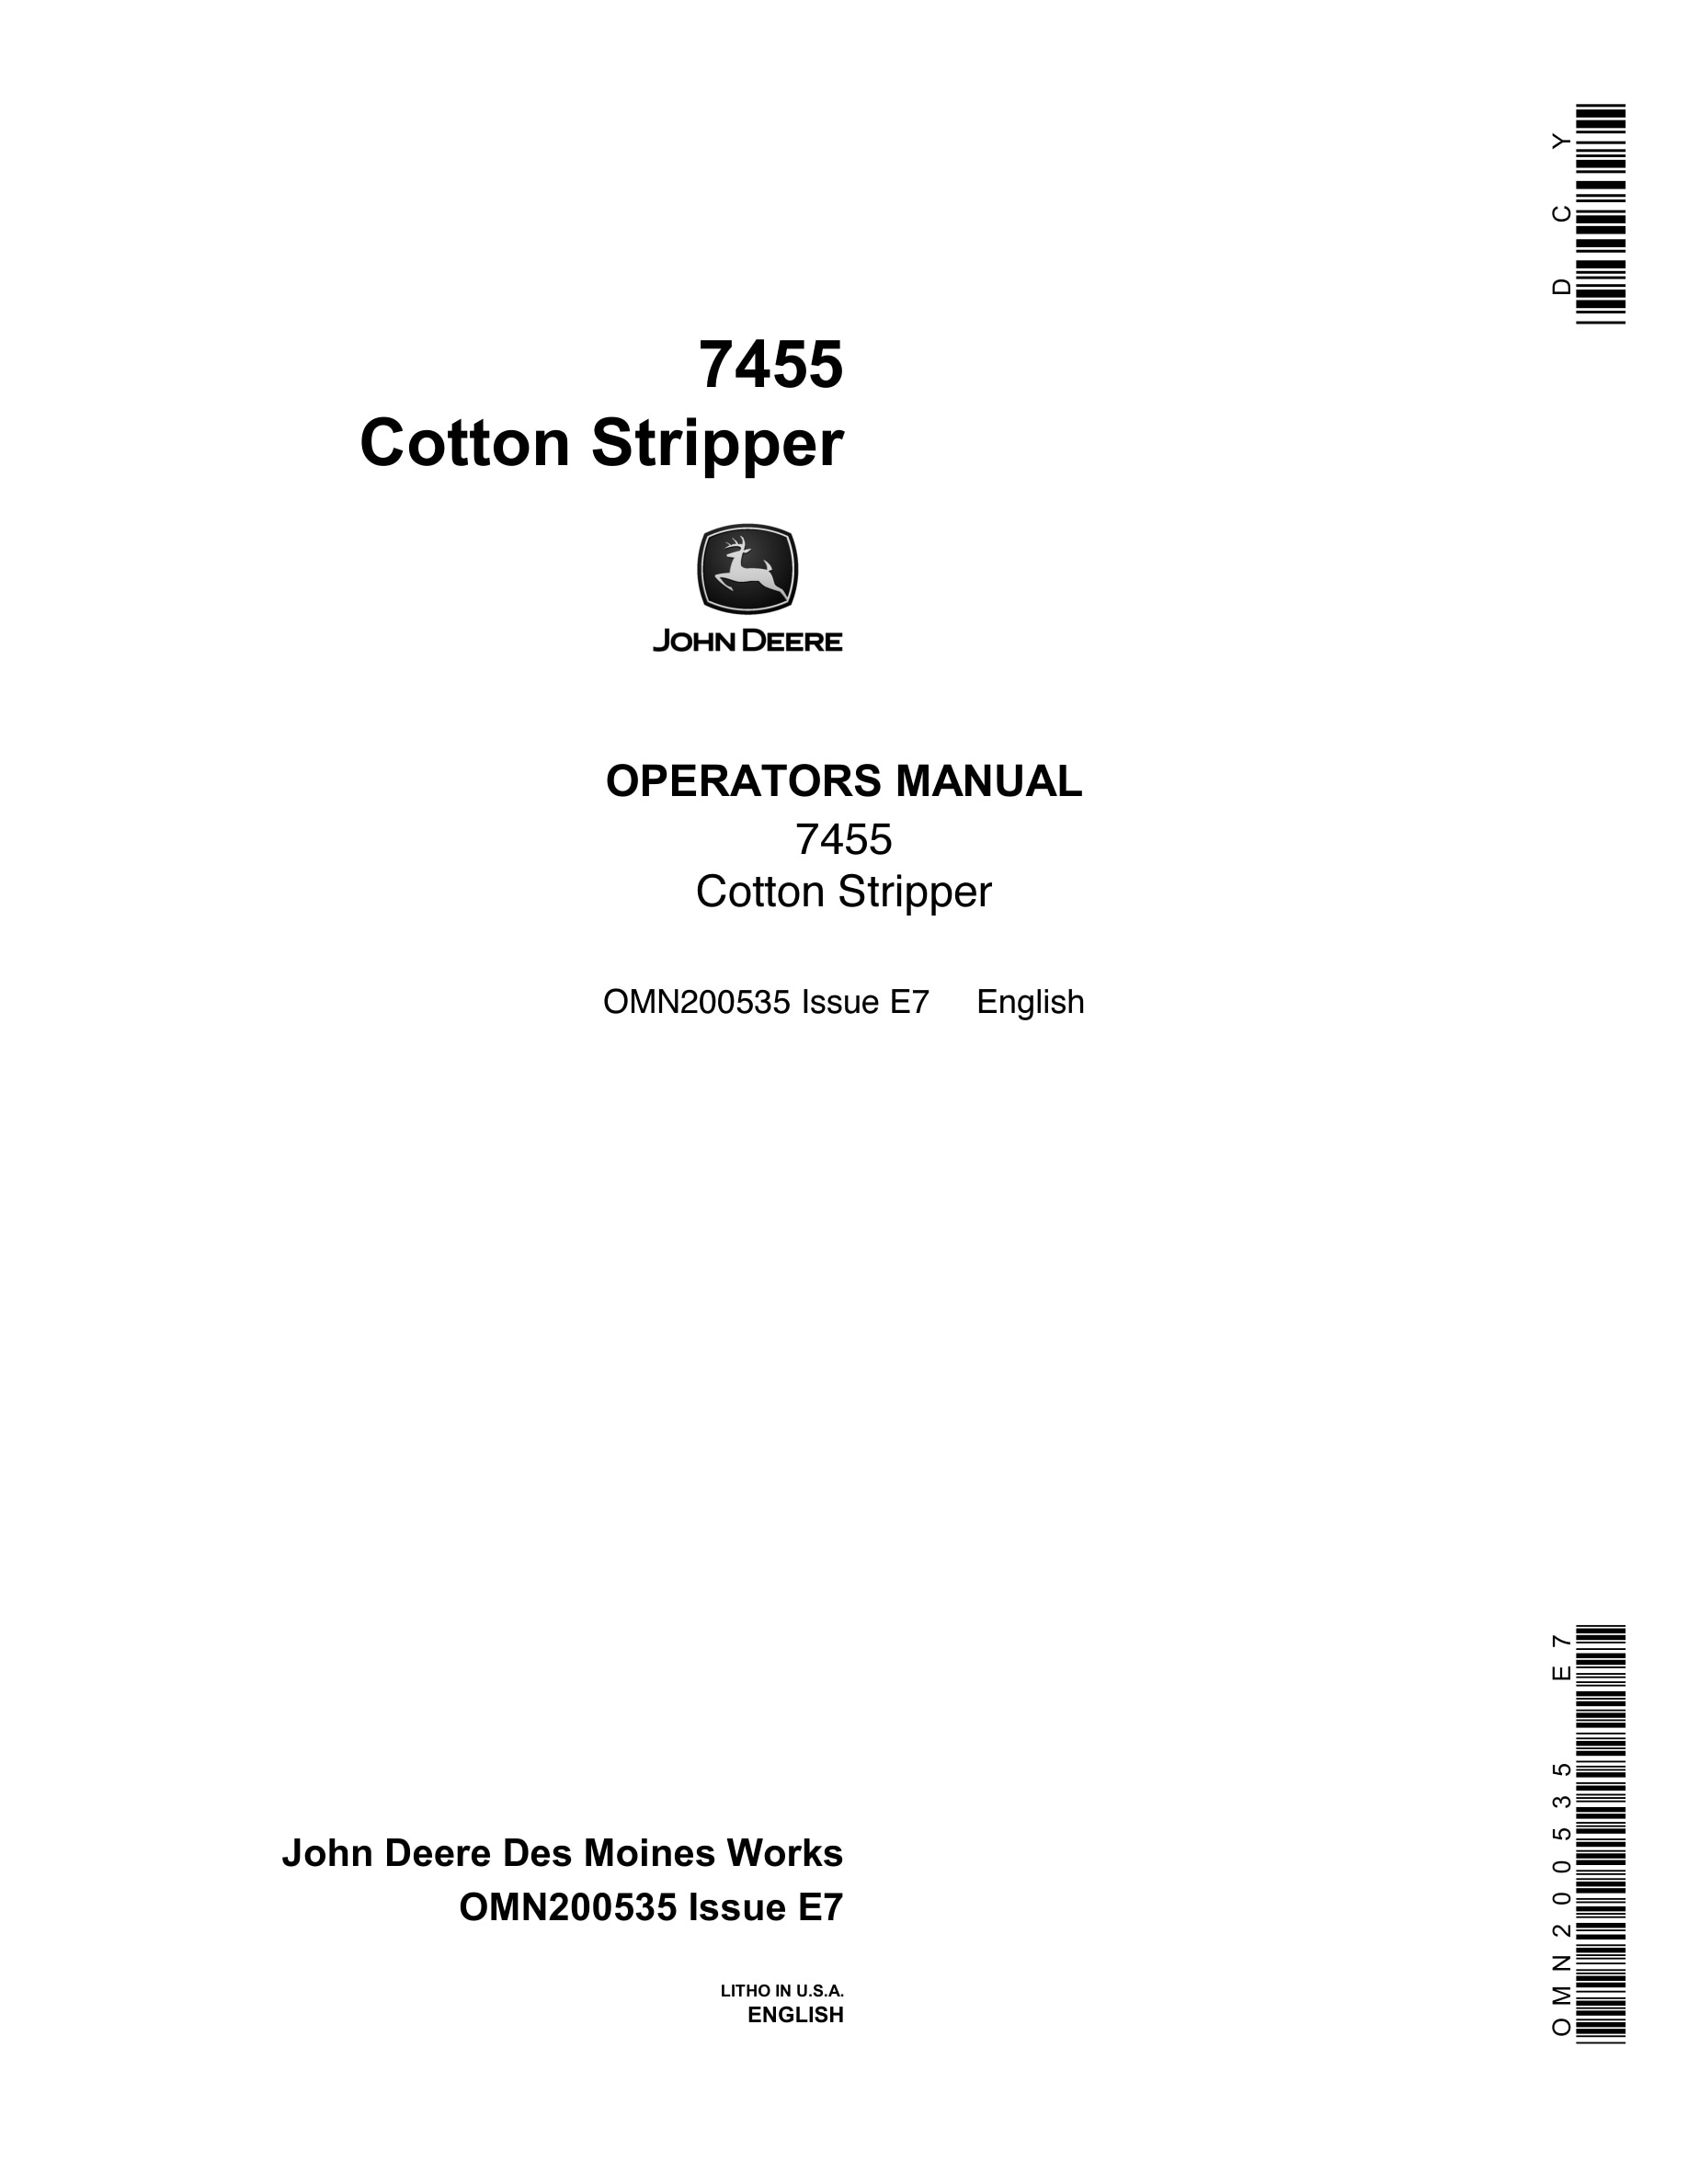 John Deere 7455 Cotton Stripper Operator Manual OMN200535-1